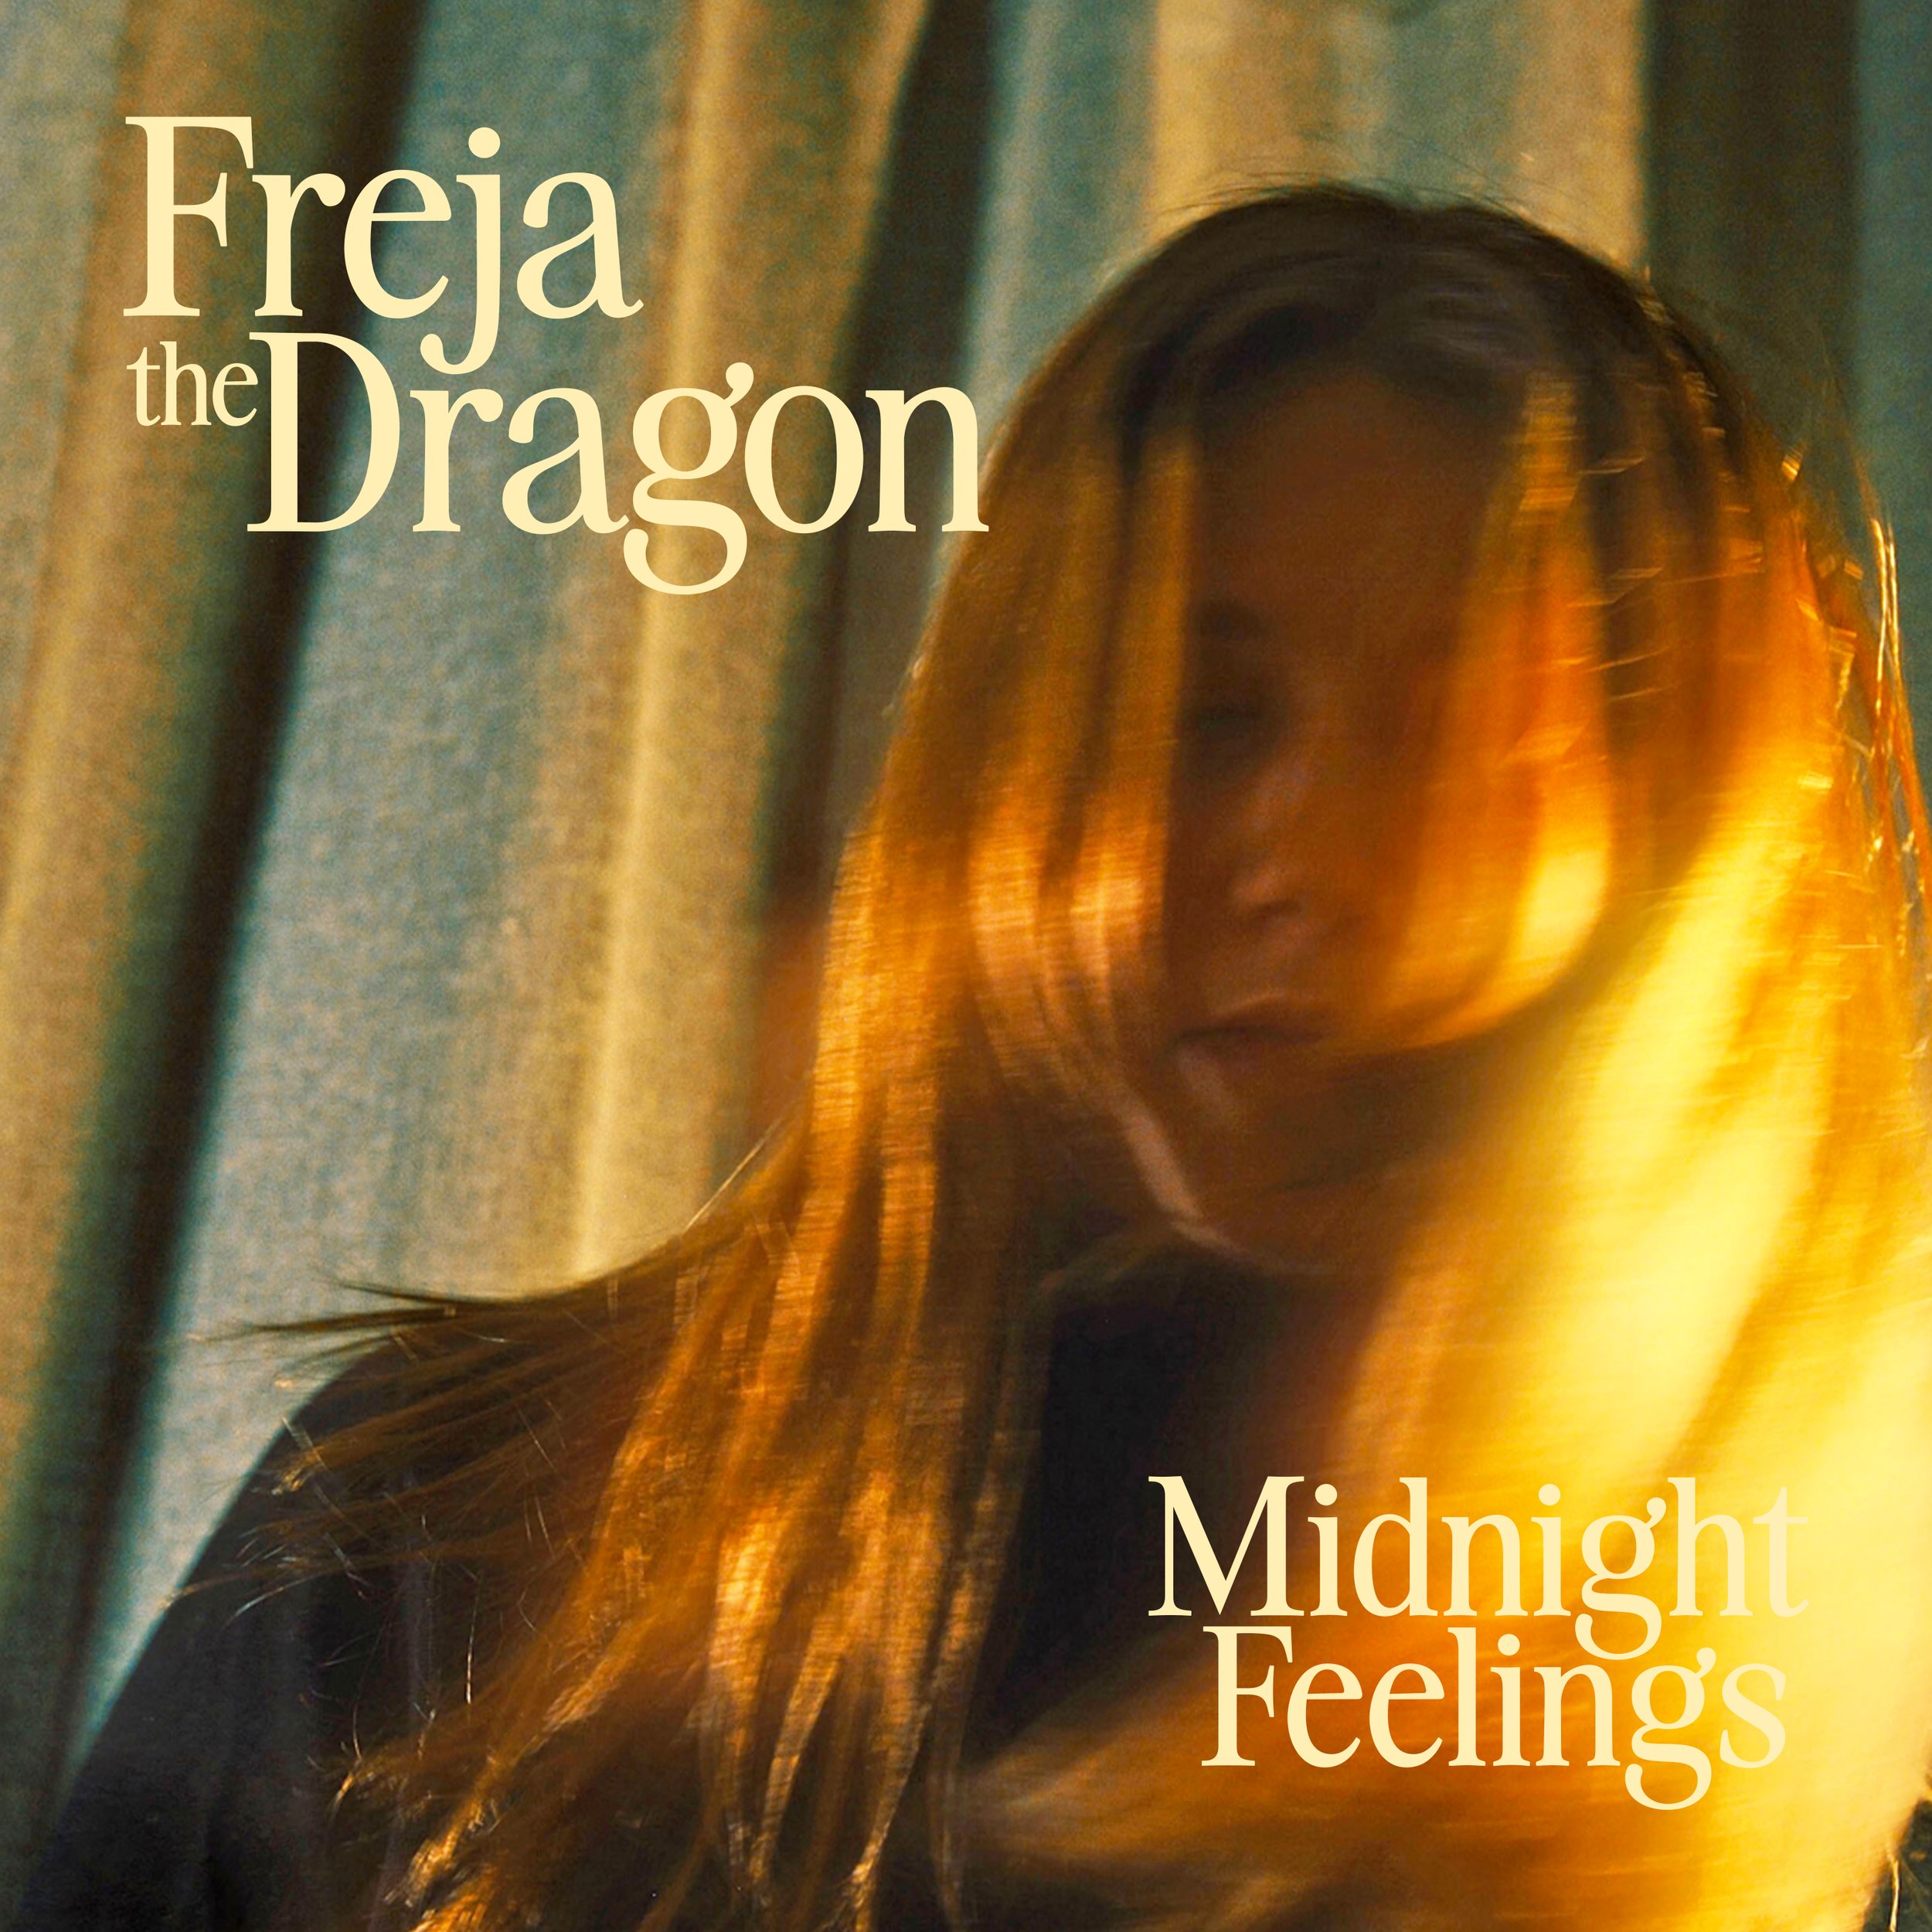 Freja The Dragon - "Midnight Feelings" - EP